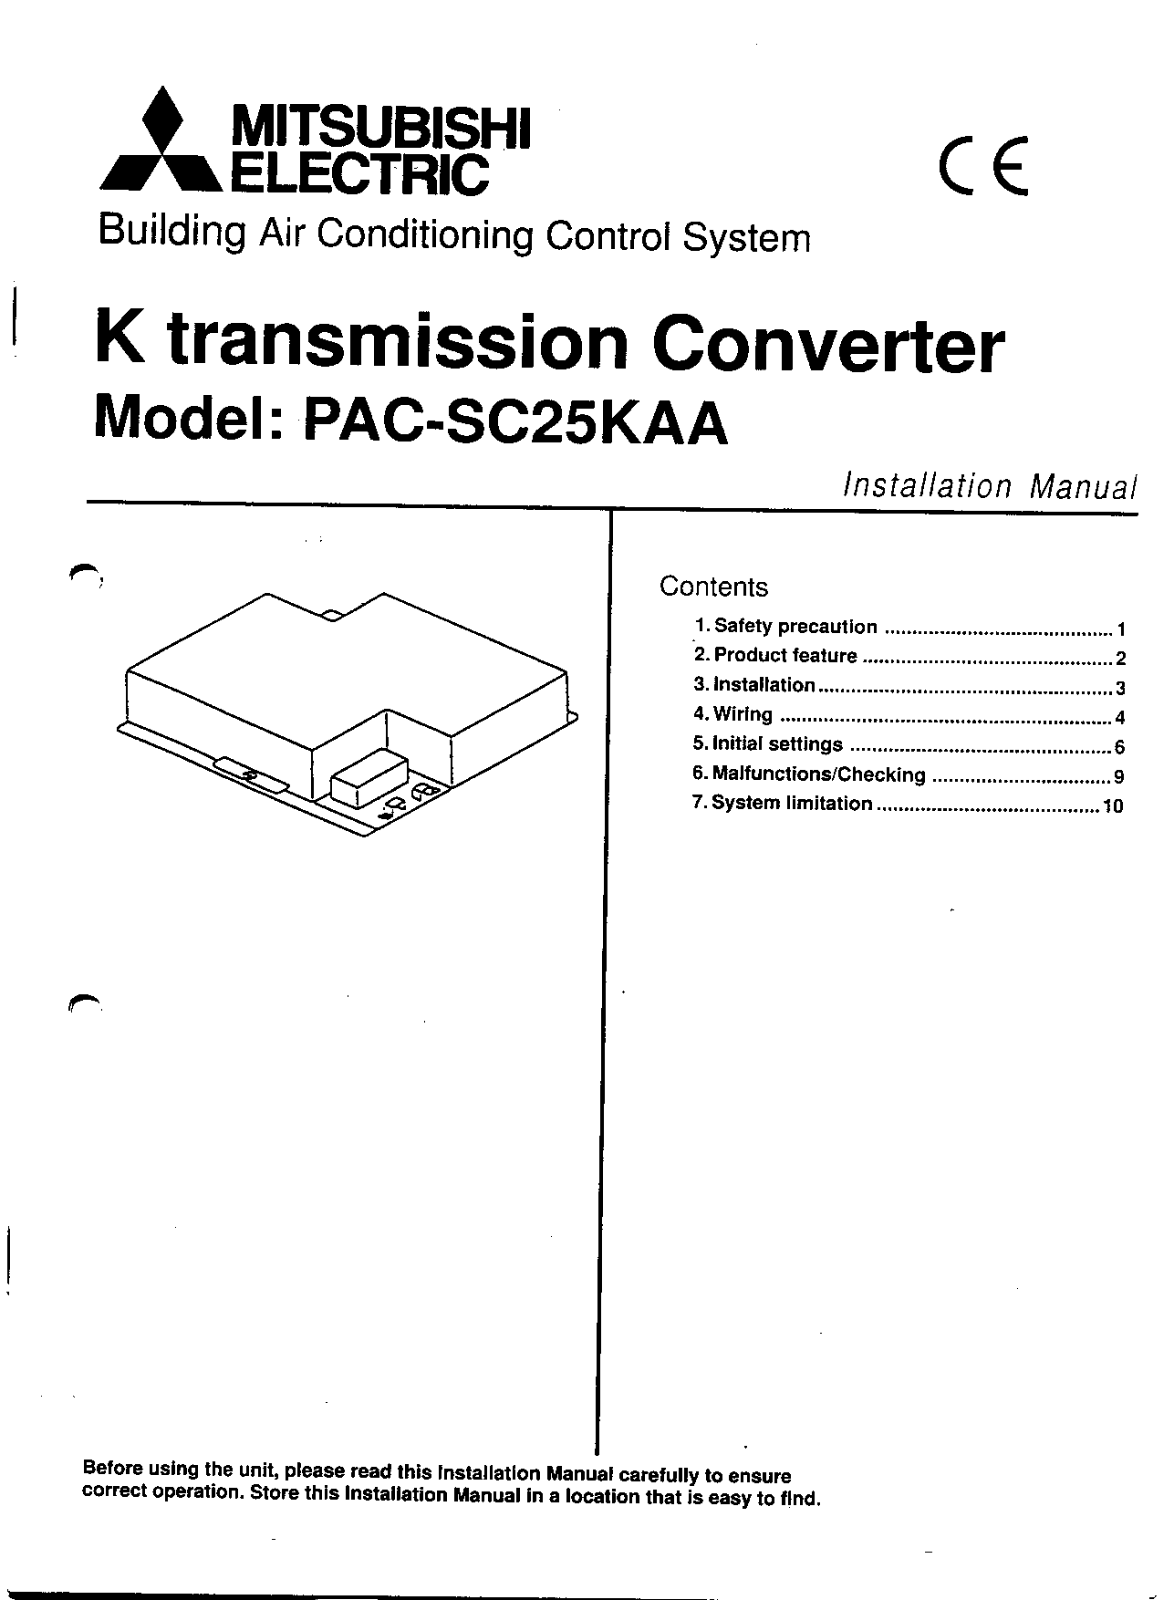 Mitsubishi PAC-SC25KAA Installation Manual